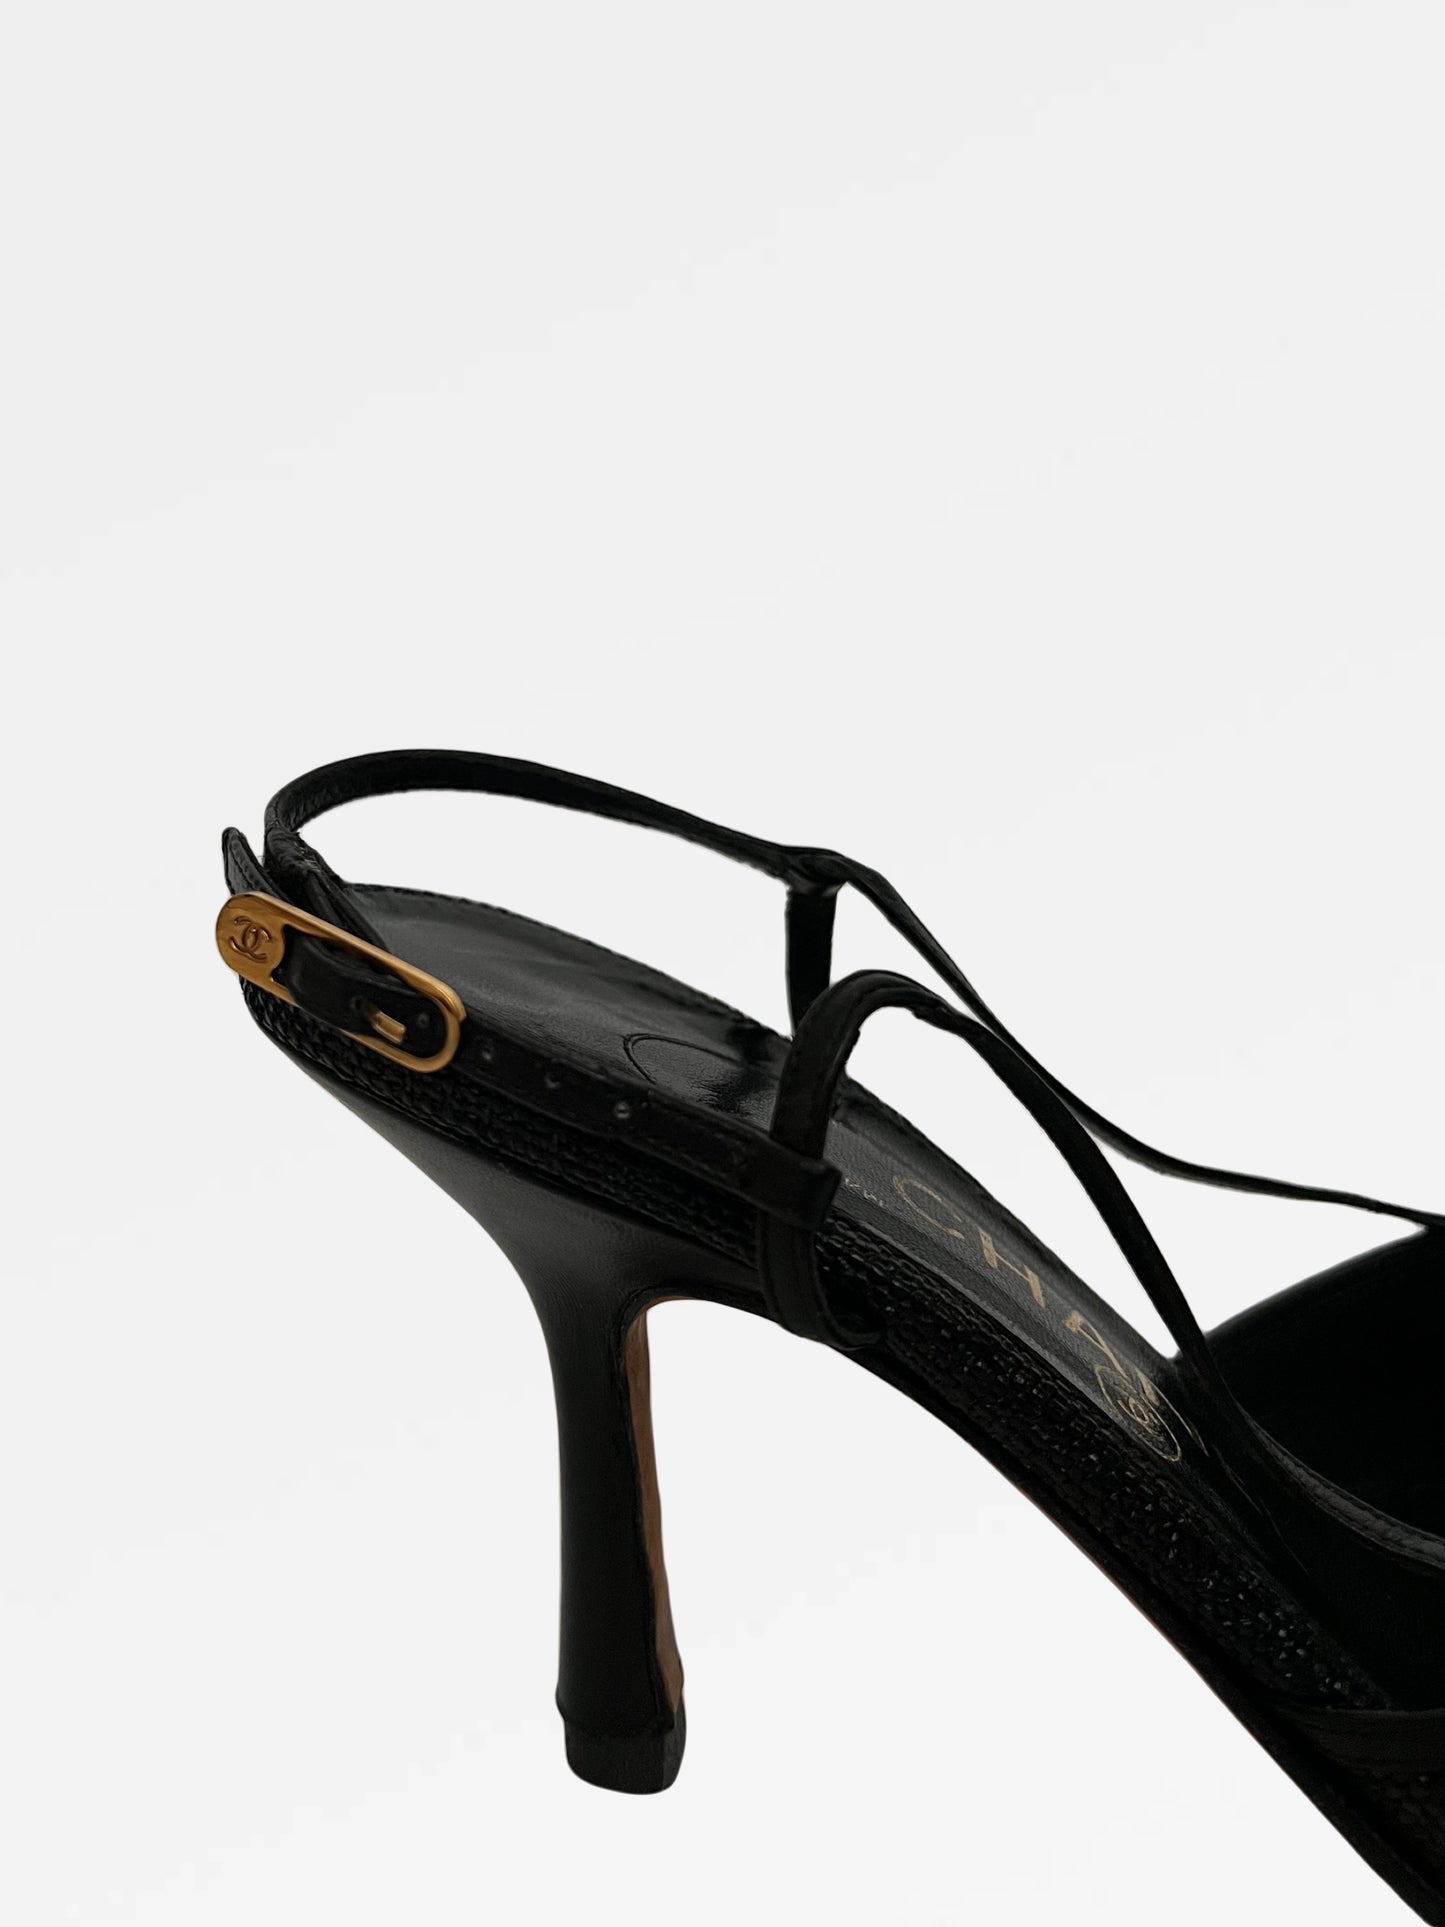 Chanel Slingback Sandals, IT 37.5